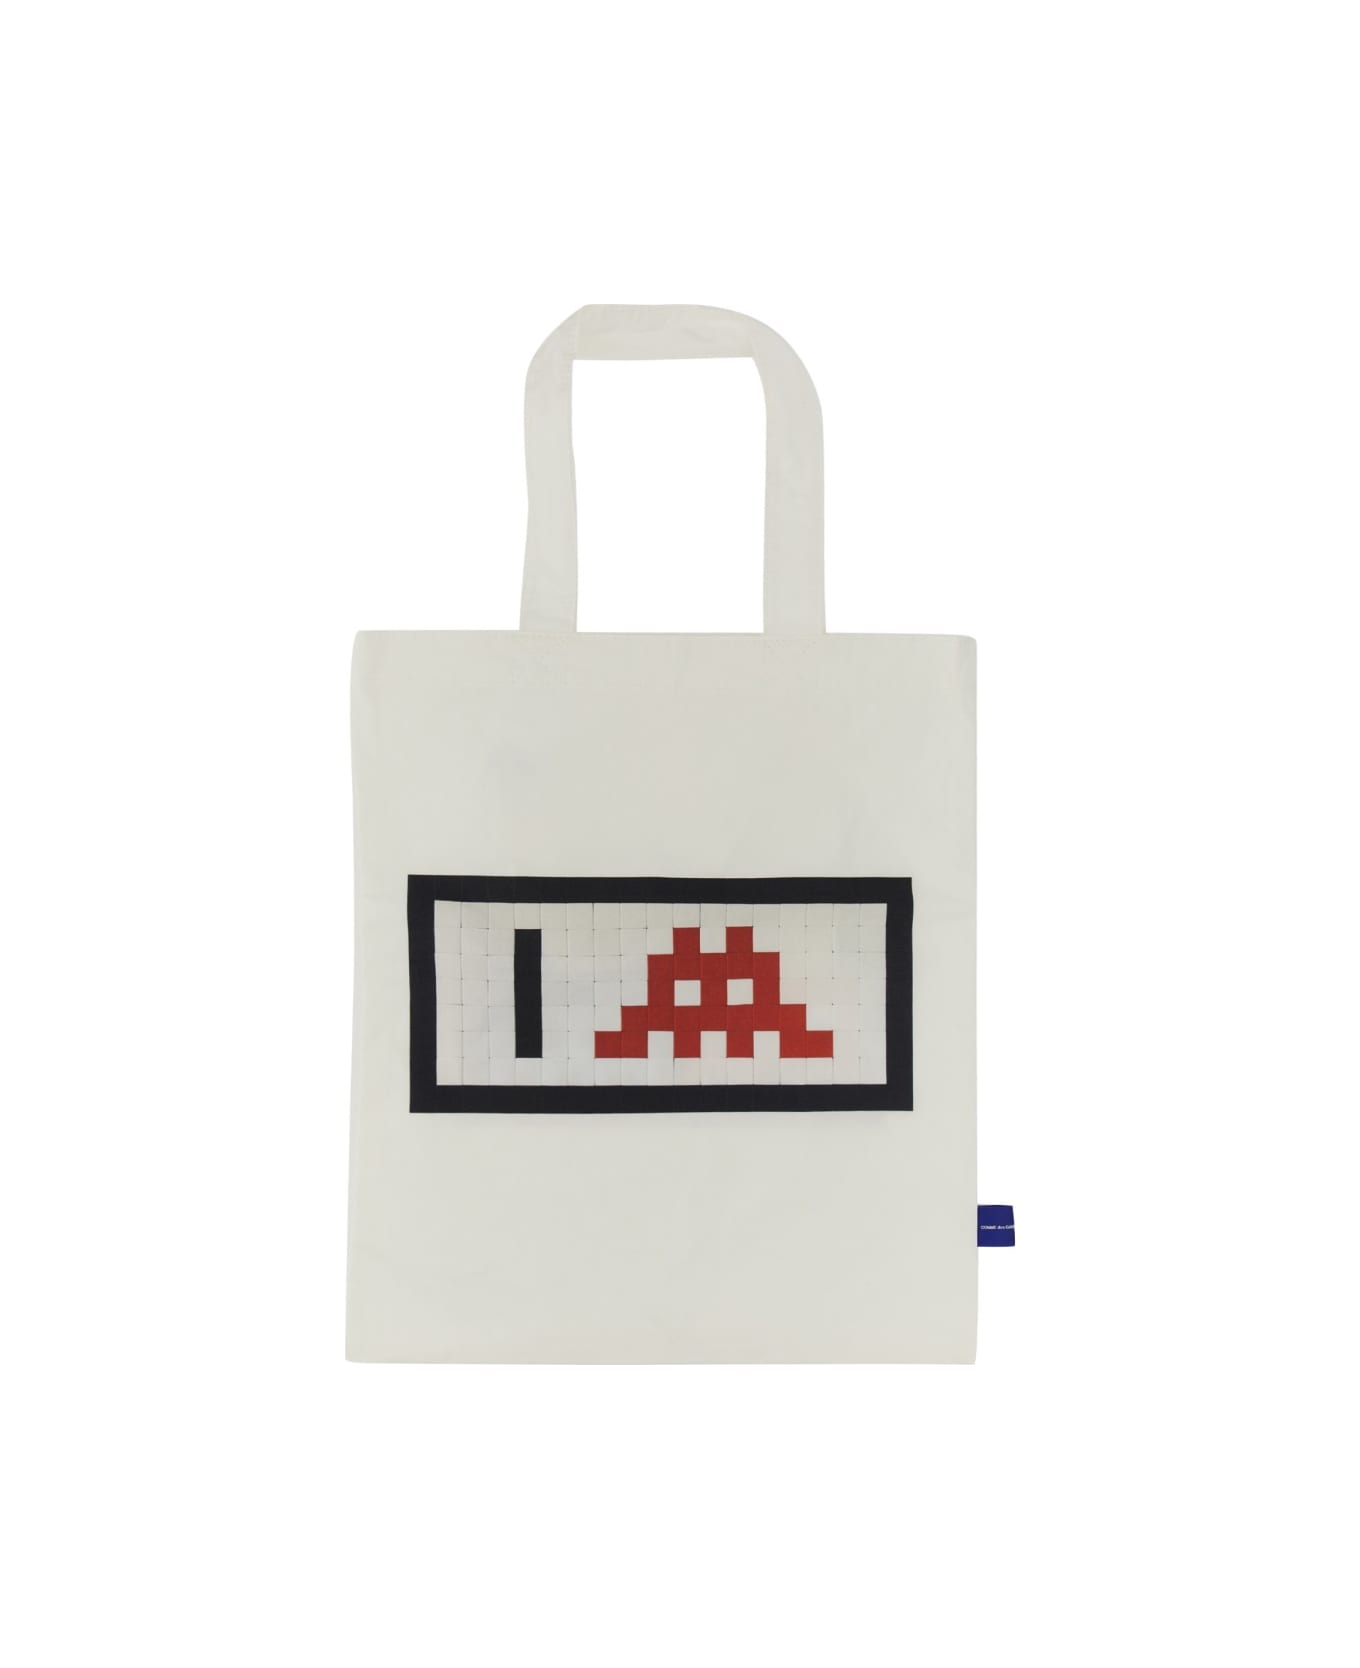 Comme des Garçons Shirt "pixel" Shopping Bag - WHITE